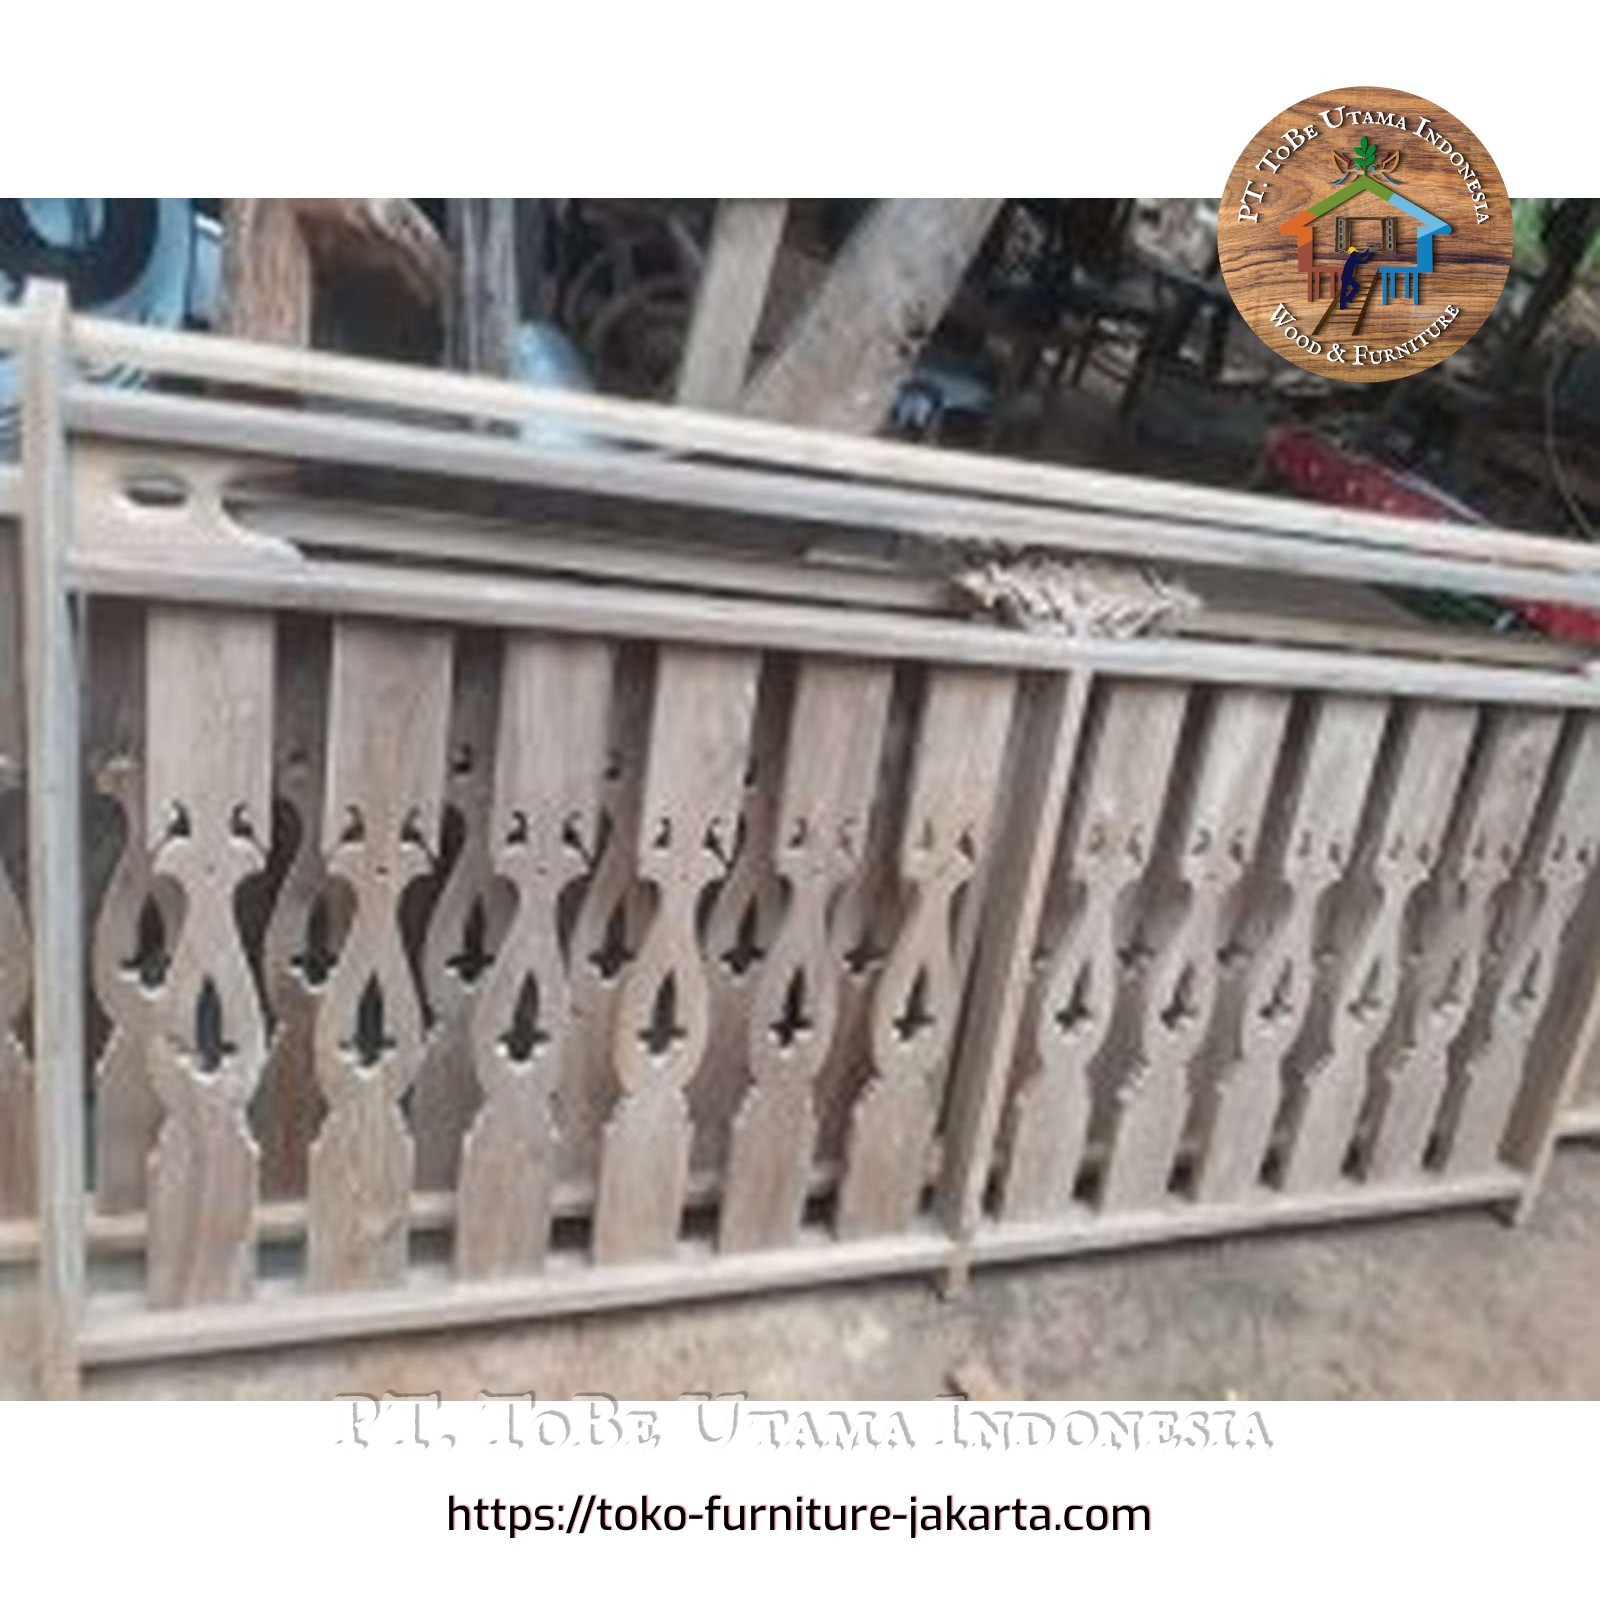 Outdoor - Fences: Balcony Pagar Betawi made of teakwood (image 1 of 1).